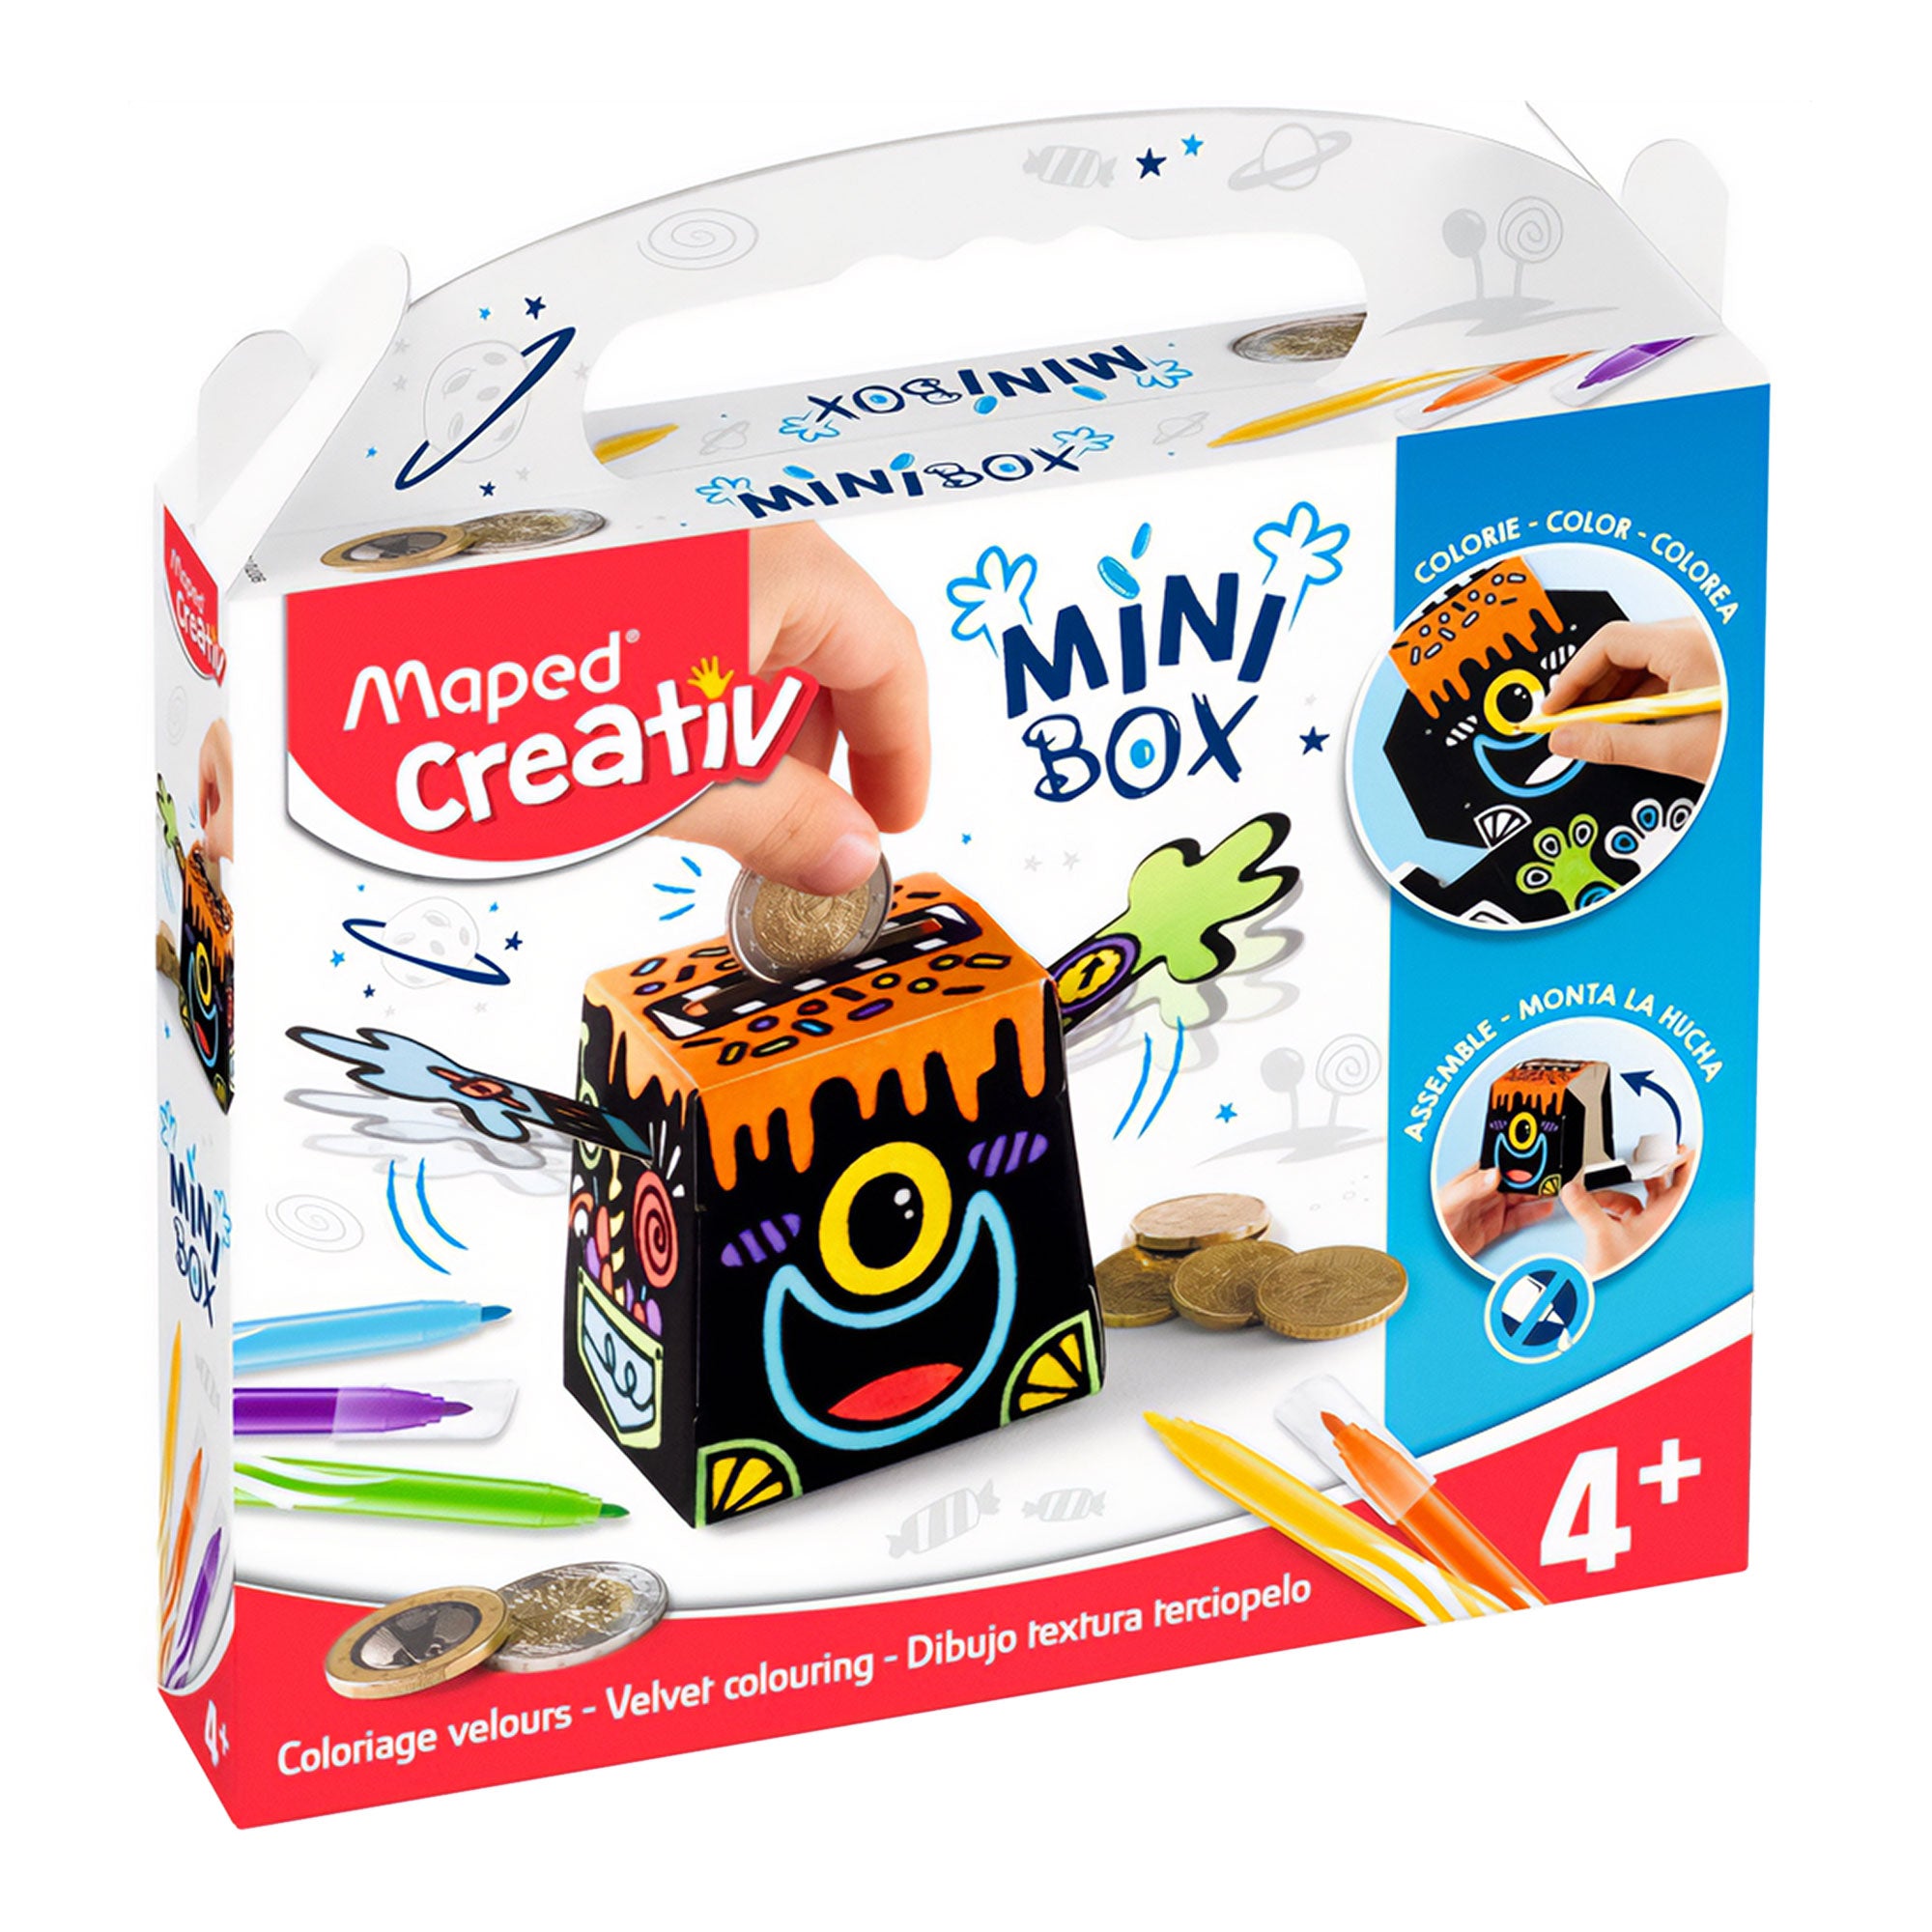 Maped Creativ Mini Box - Velvet Colouring Money Box Kit